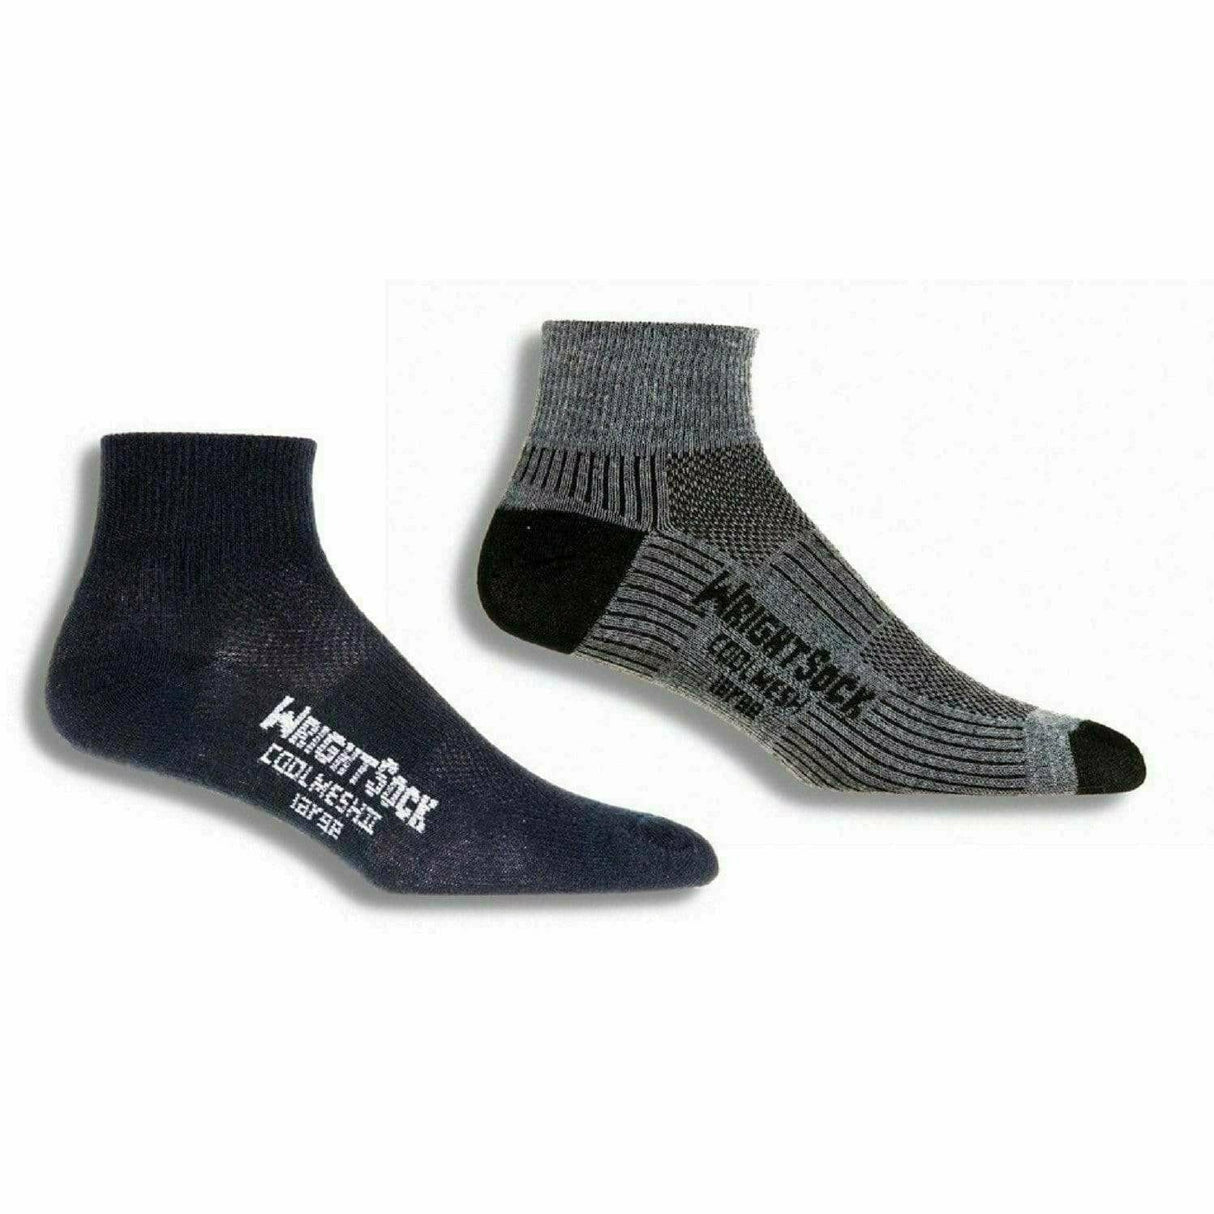 Wrightsock Coolmesh II Quarter Socks  -  Small / Black/Grey / 2-Pair Pack